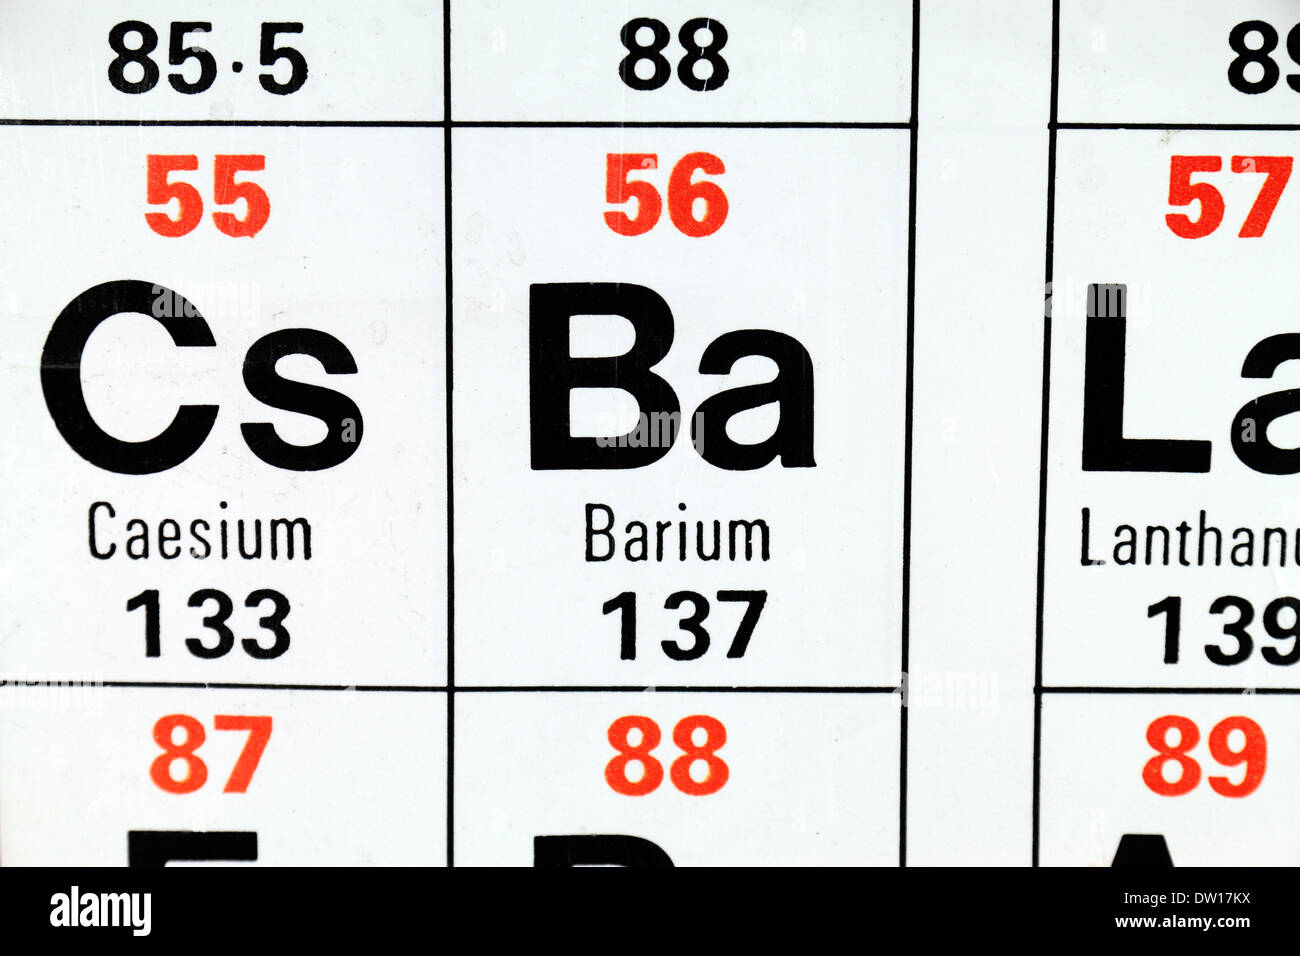 ba periodic table barium appears alamy